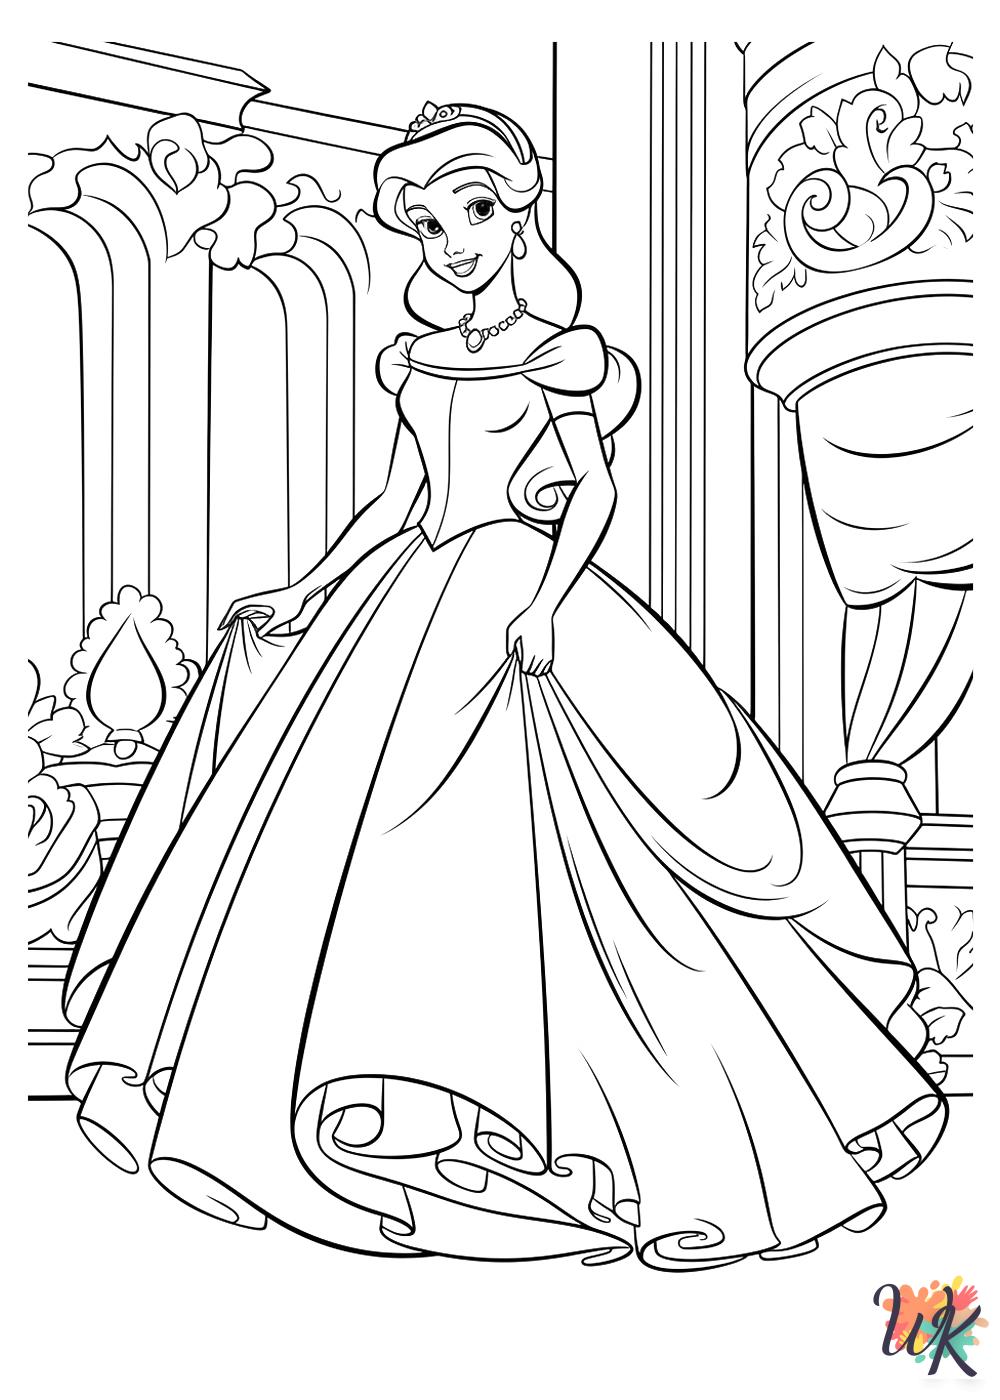 Cinderella coloring pages printable free